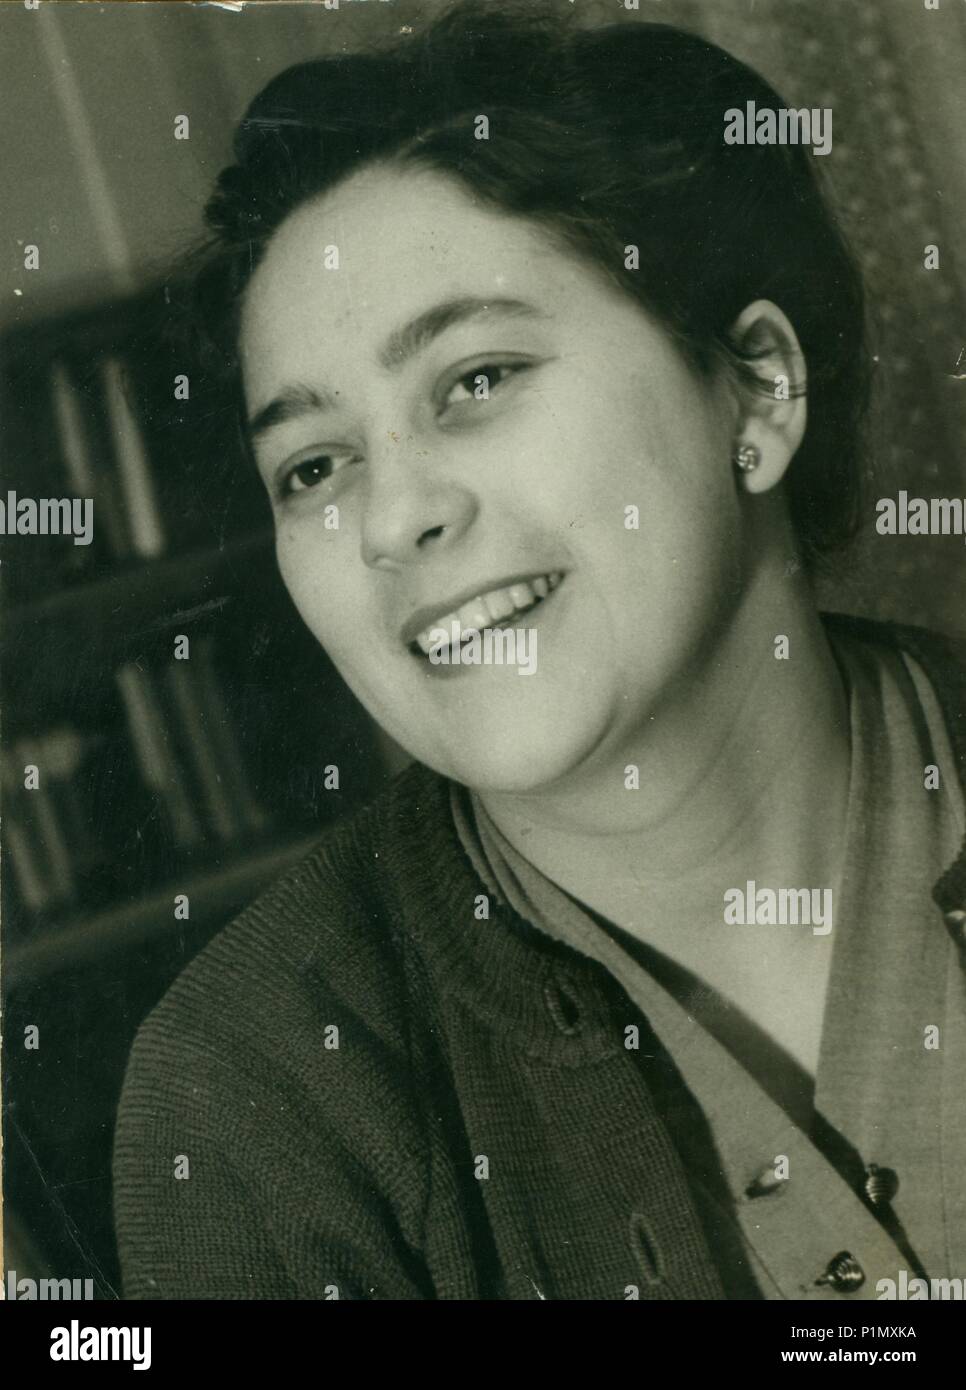 THE CZECHOSLOVAK SOCIALIST REPUBLIC - CIRCA 1960s: Retro photo shows studio portrait of mature woman. Vintage black & white photography. Stock Photo